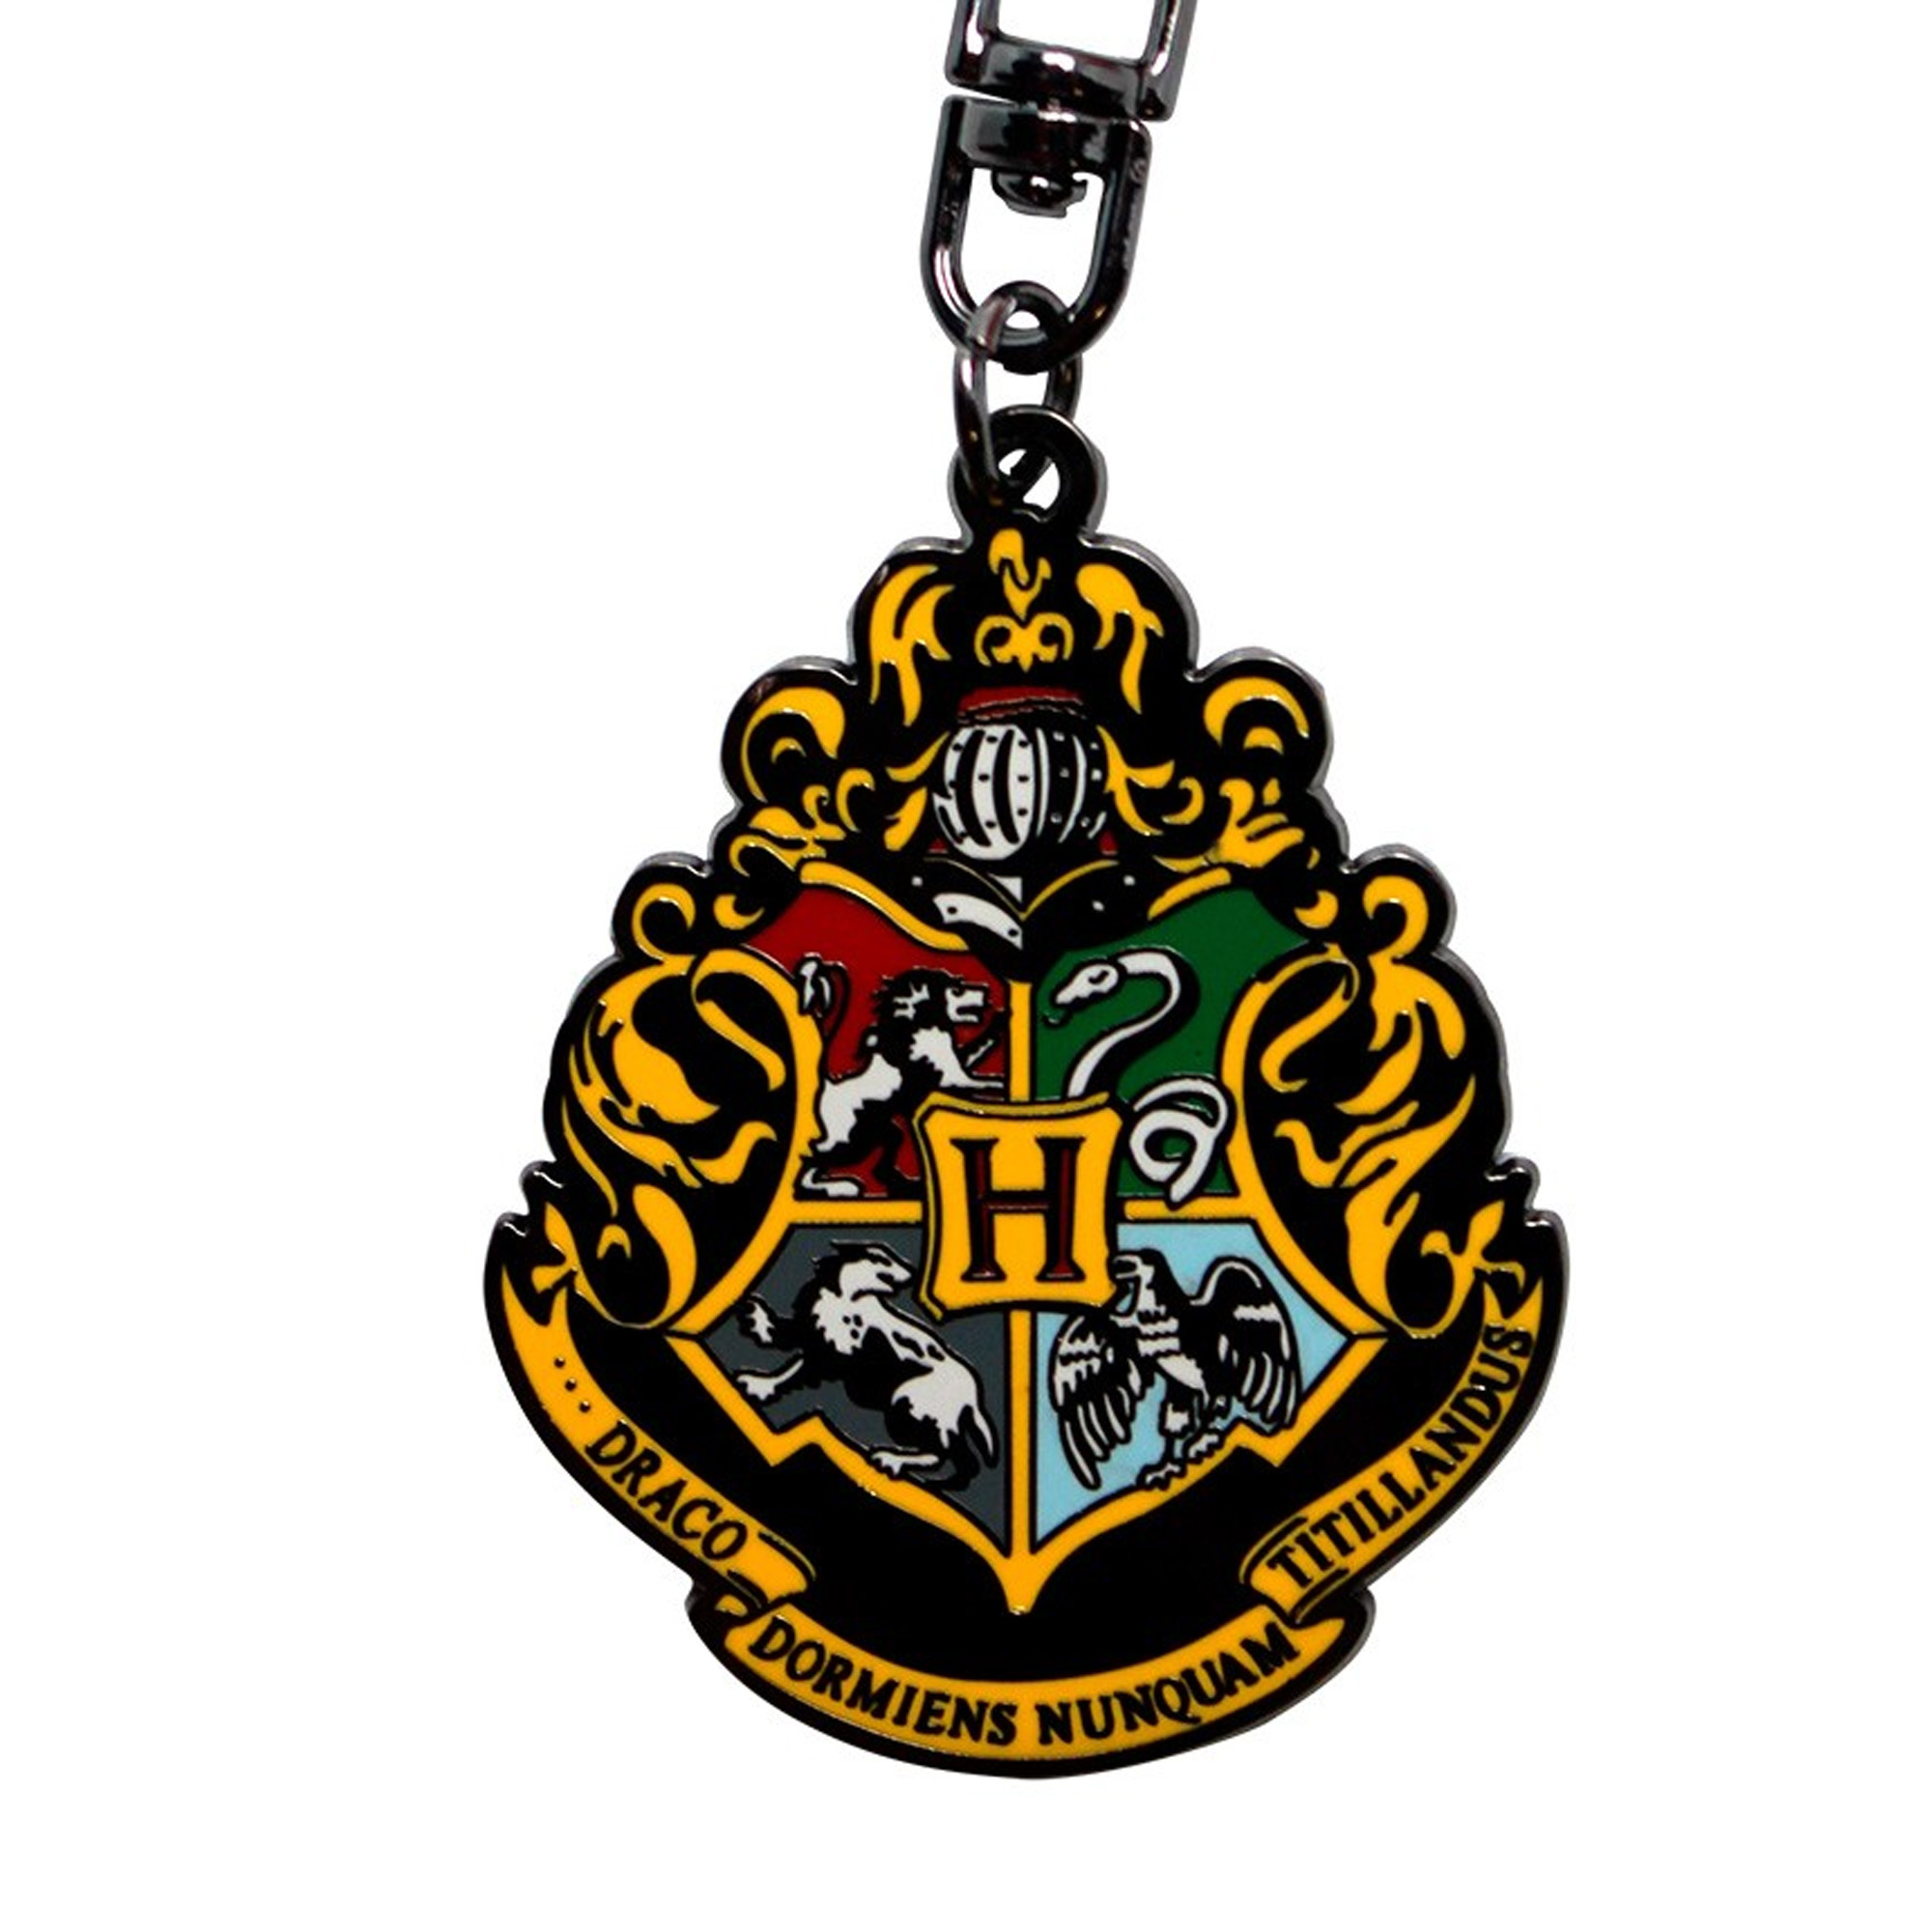 Hogwarts Metall-Schlüsselanhänger - Harry Potter